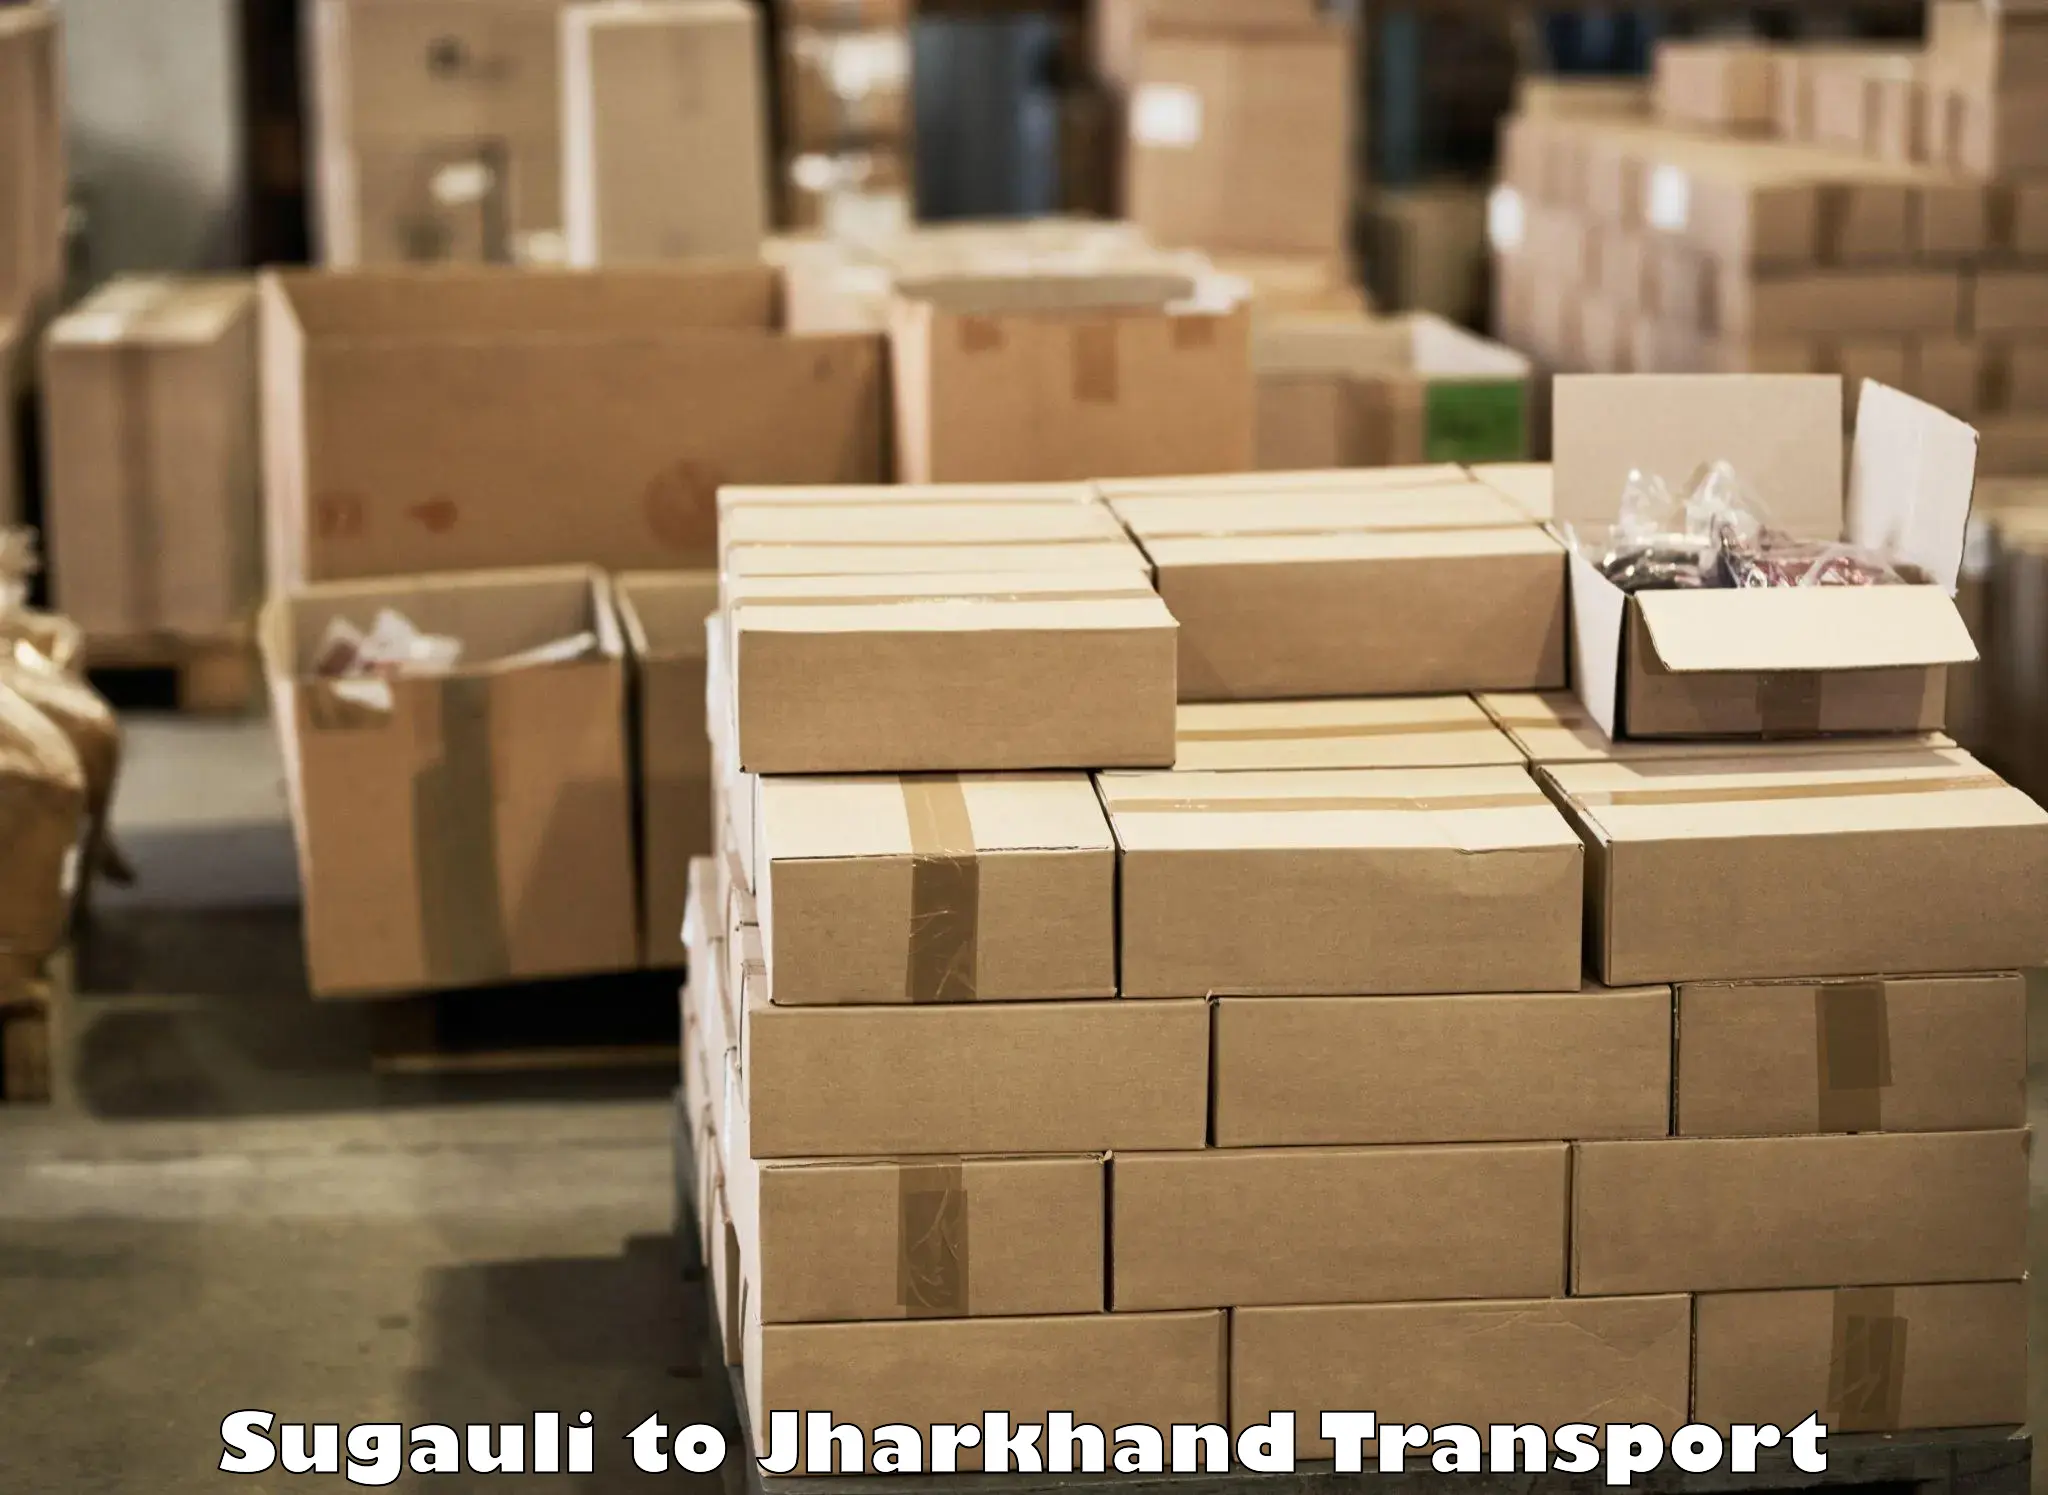 Truck transport companies in India Sugauli to Domchanch